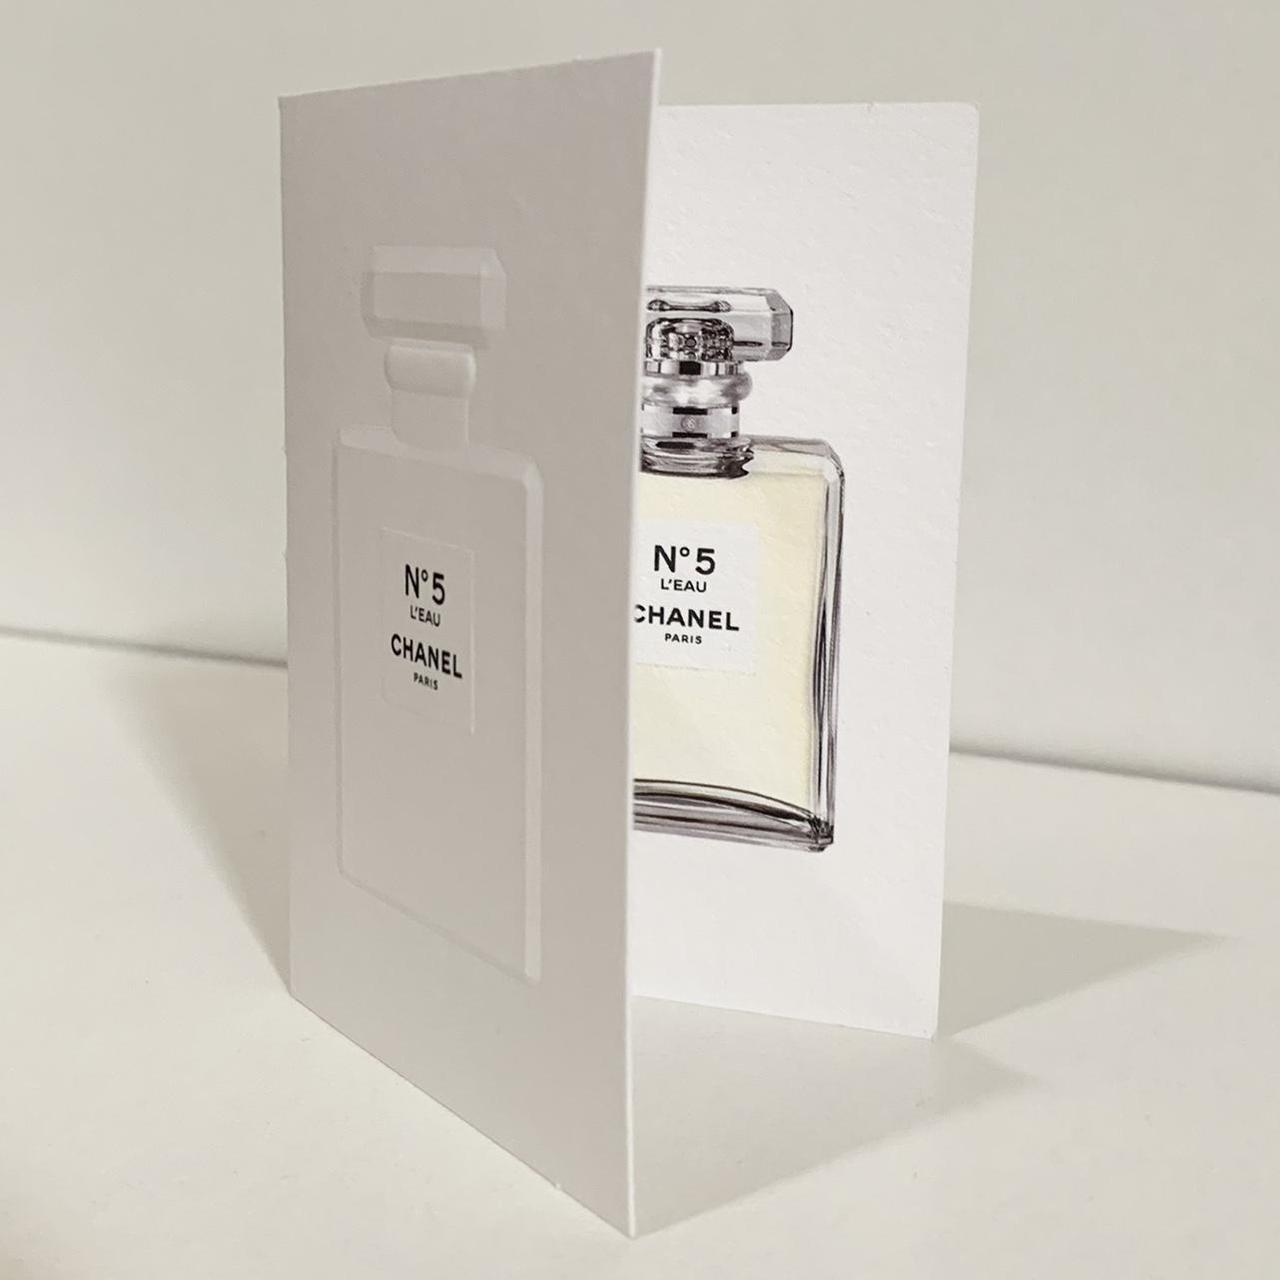 Mini Chanel perfume no 5 eau de parfum fragrance.